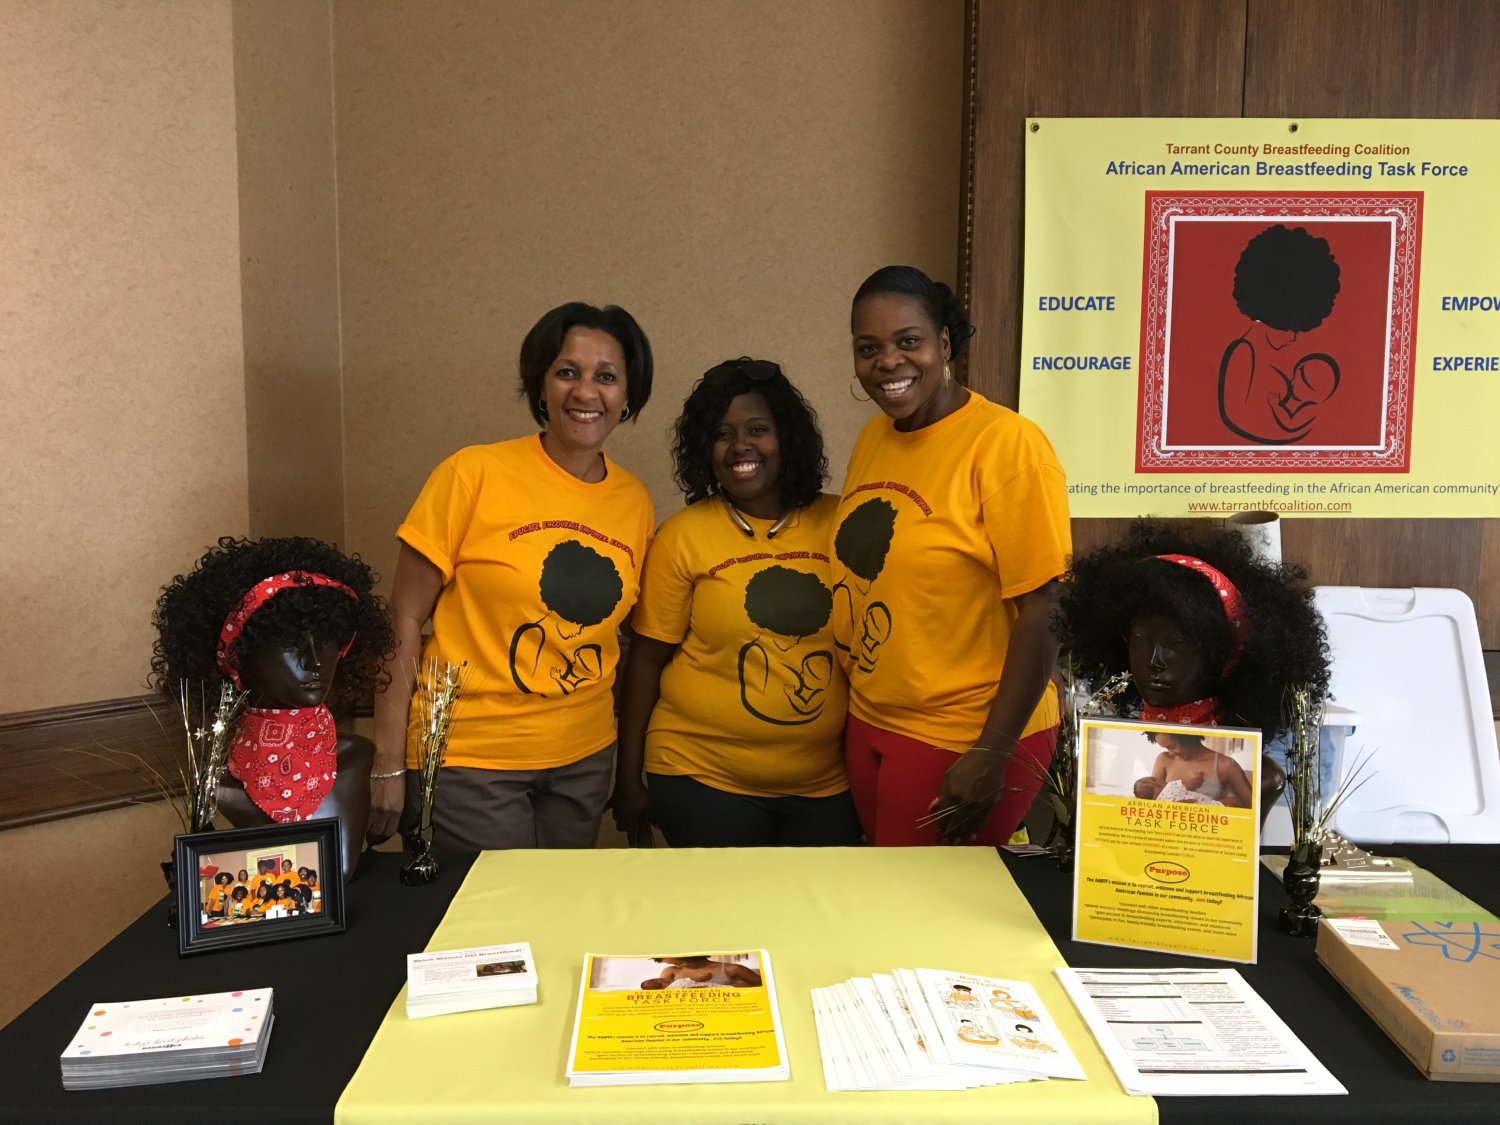 Volunteers at the African American Breastfeeding Task Force booth